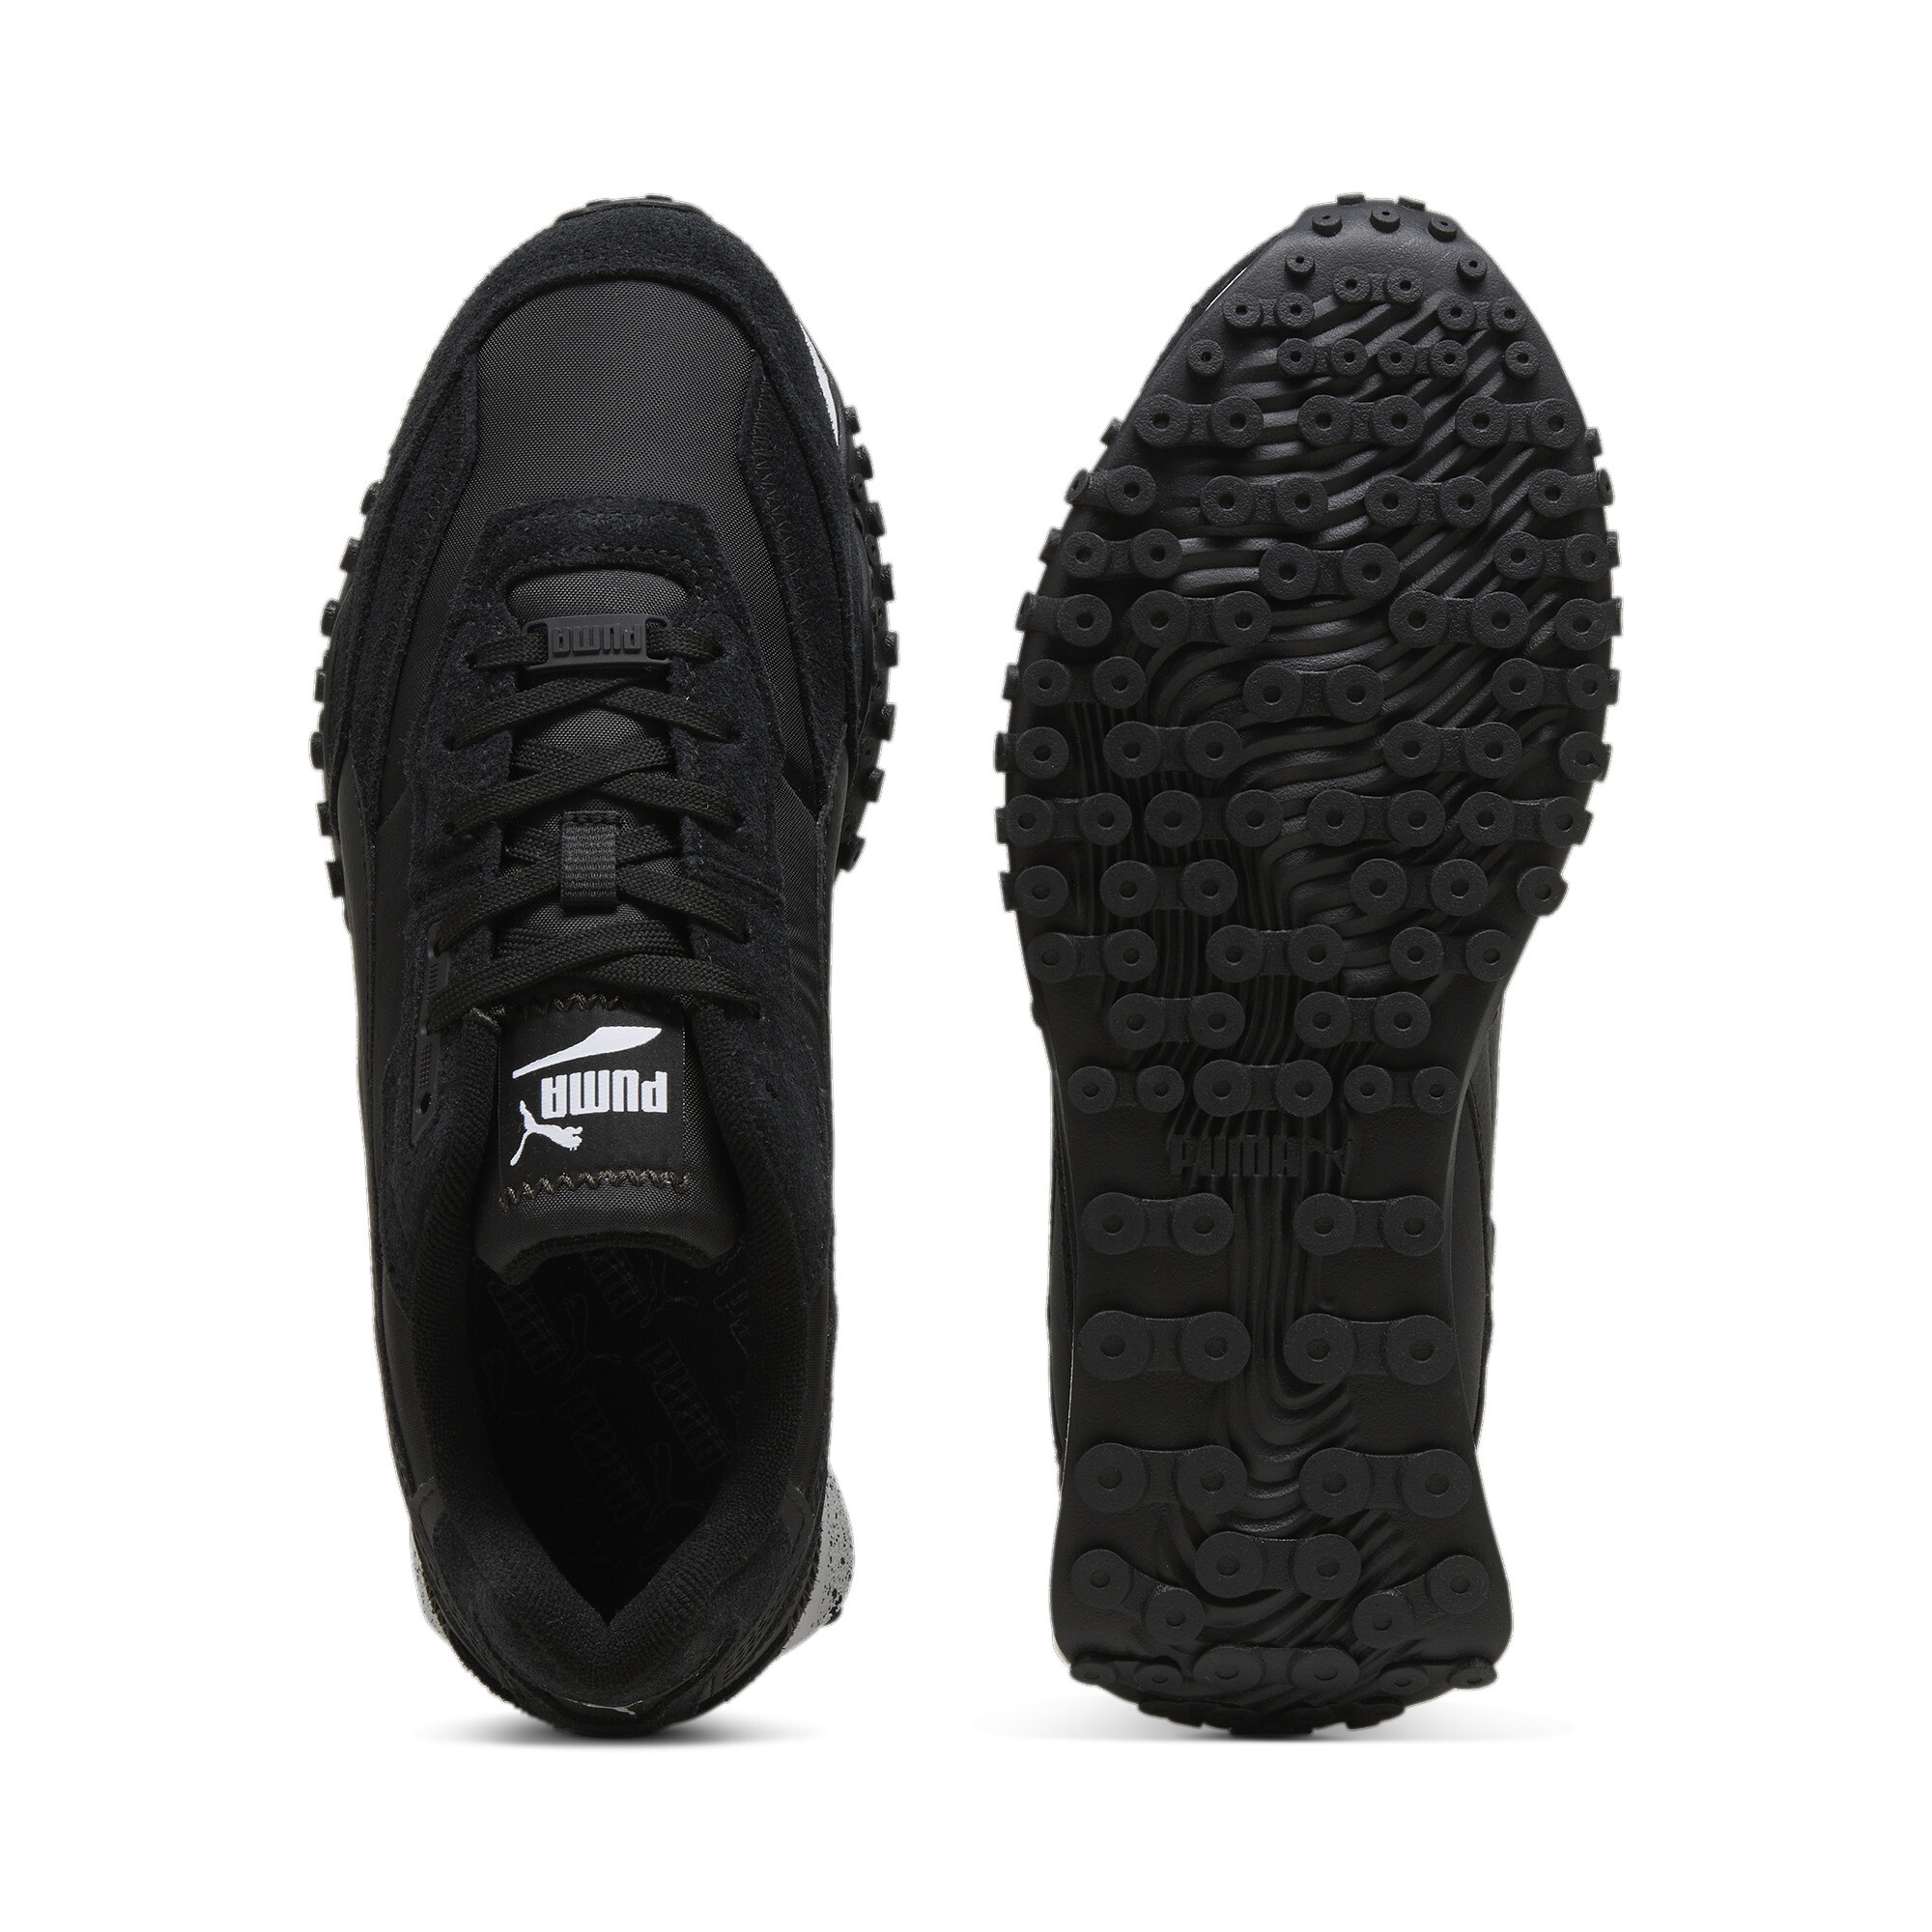 Men's PUMA Blktop Rider Sneakers In Black, Size EU 44